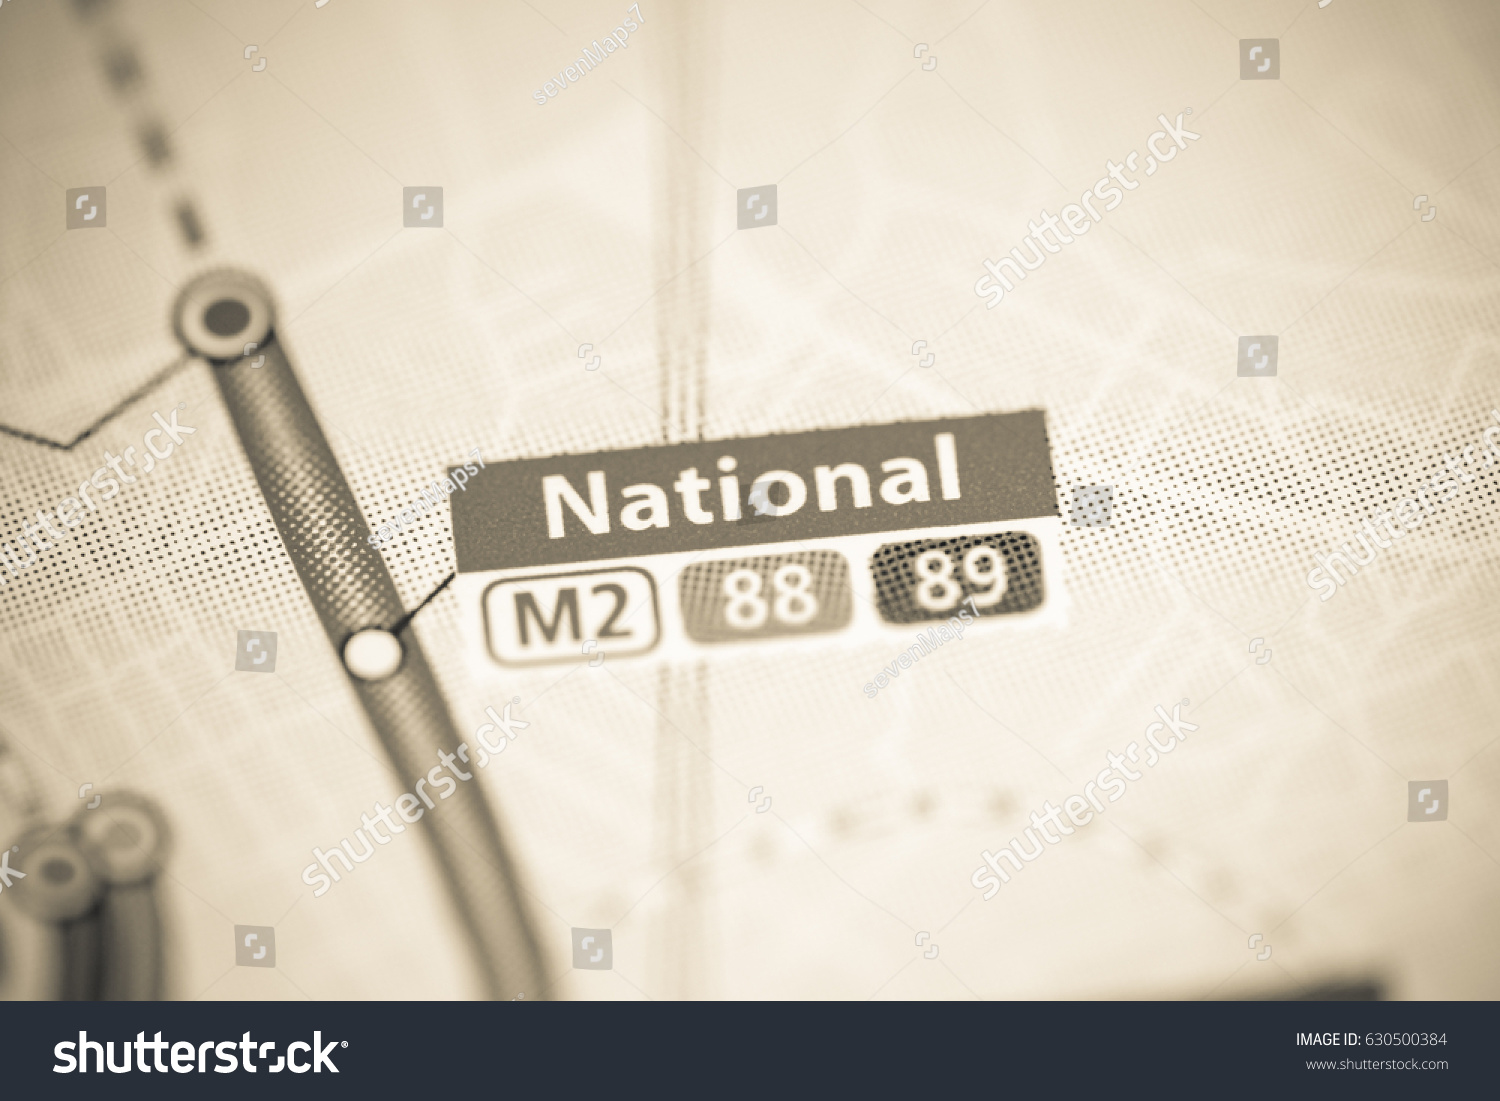 Stock Photo National Station Marseille Metro Map 630500384 